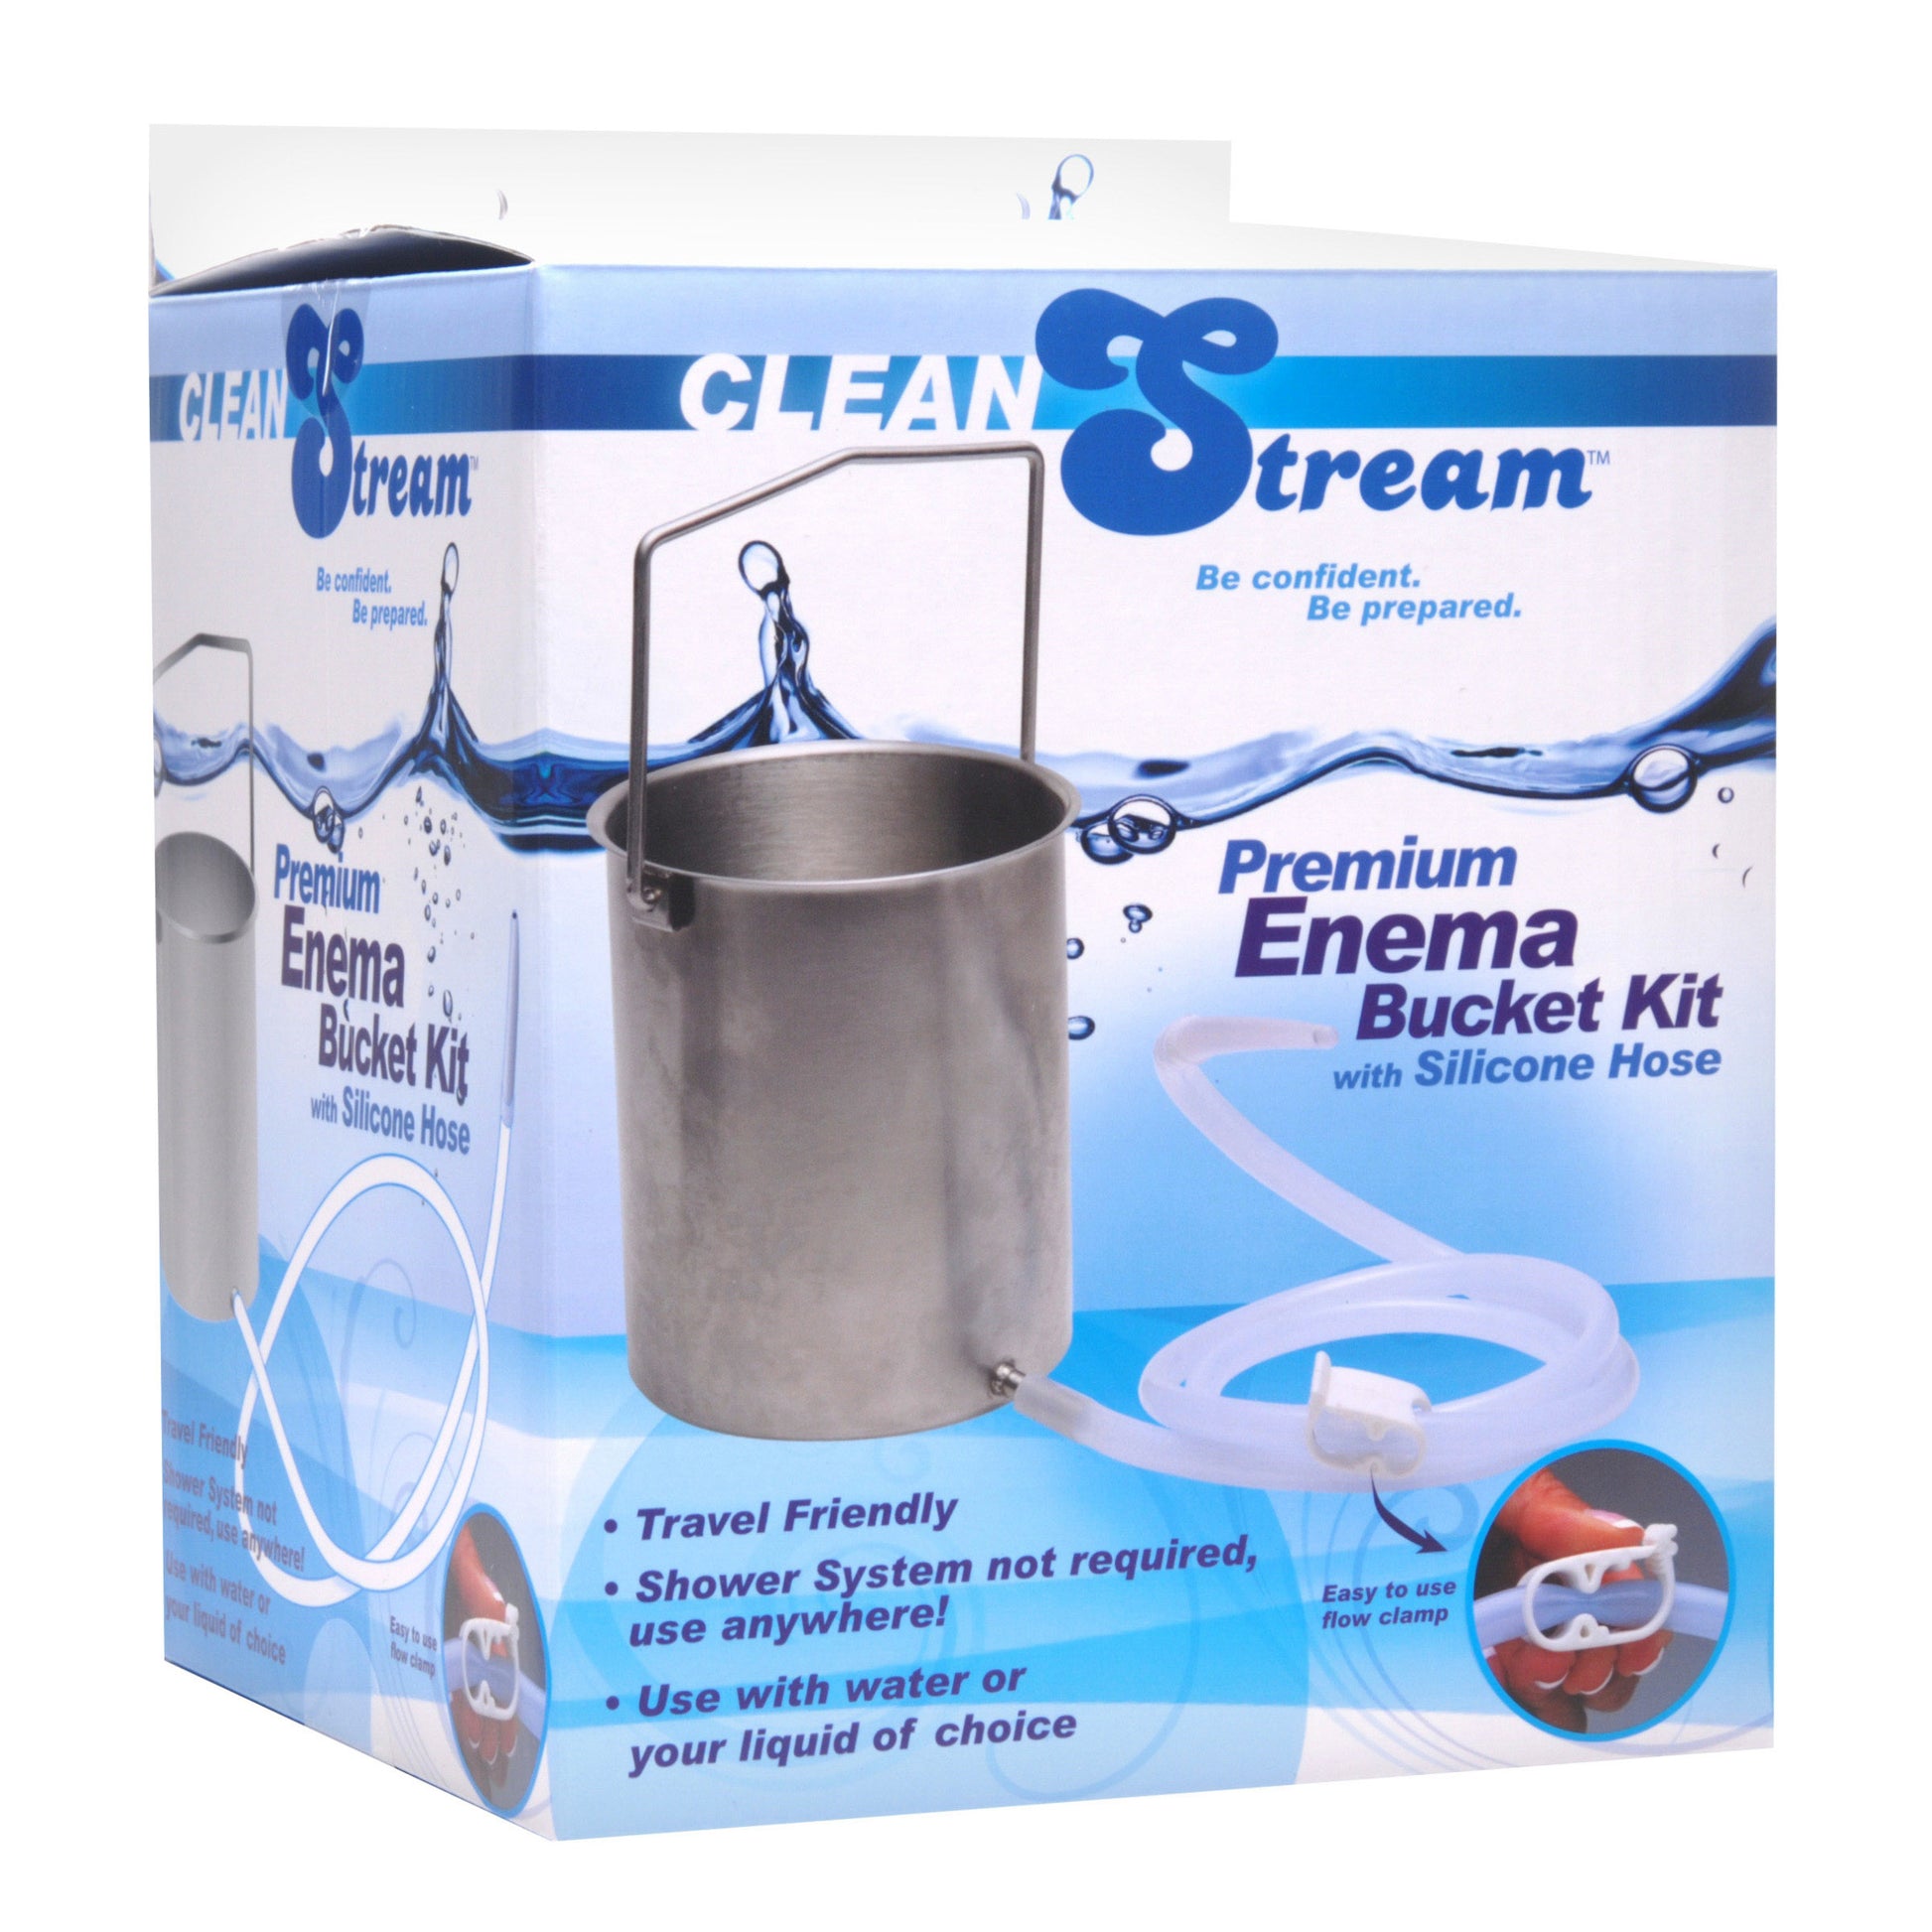 CleanStream Premium Enema Bucket Kit with Silicone Hose - UABDSM